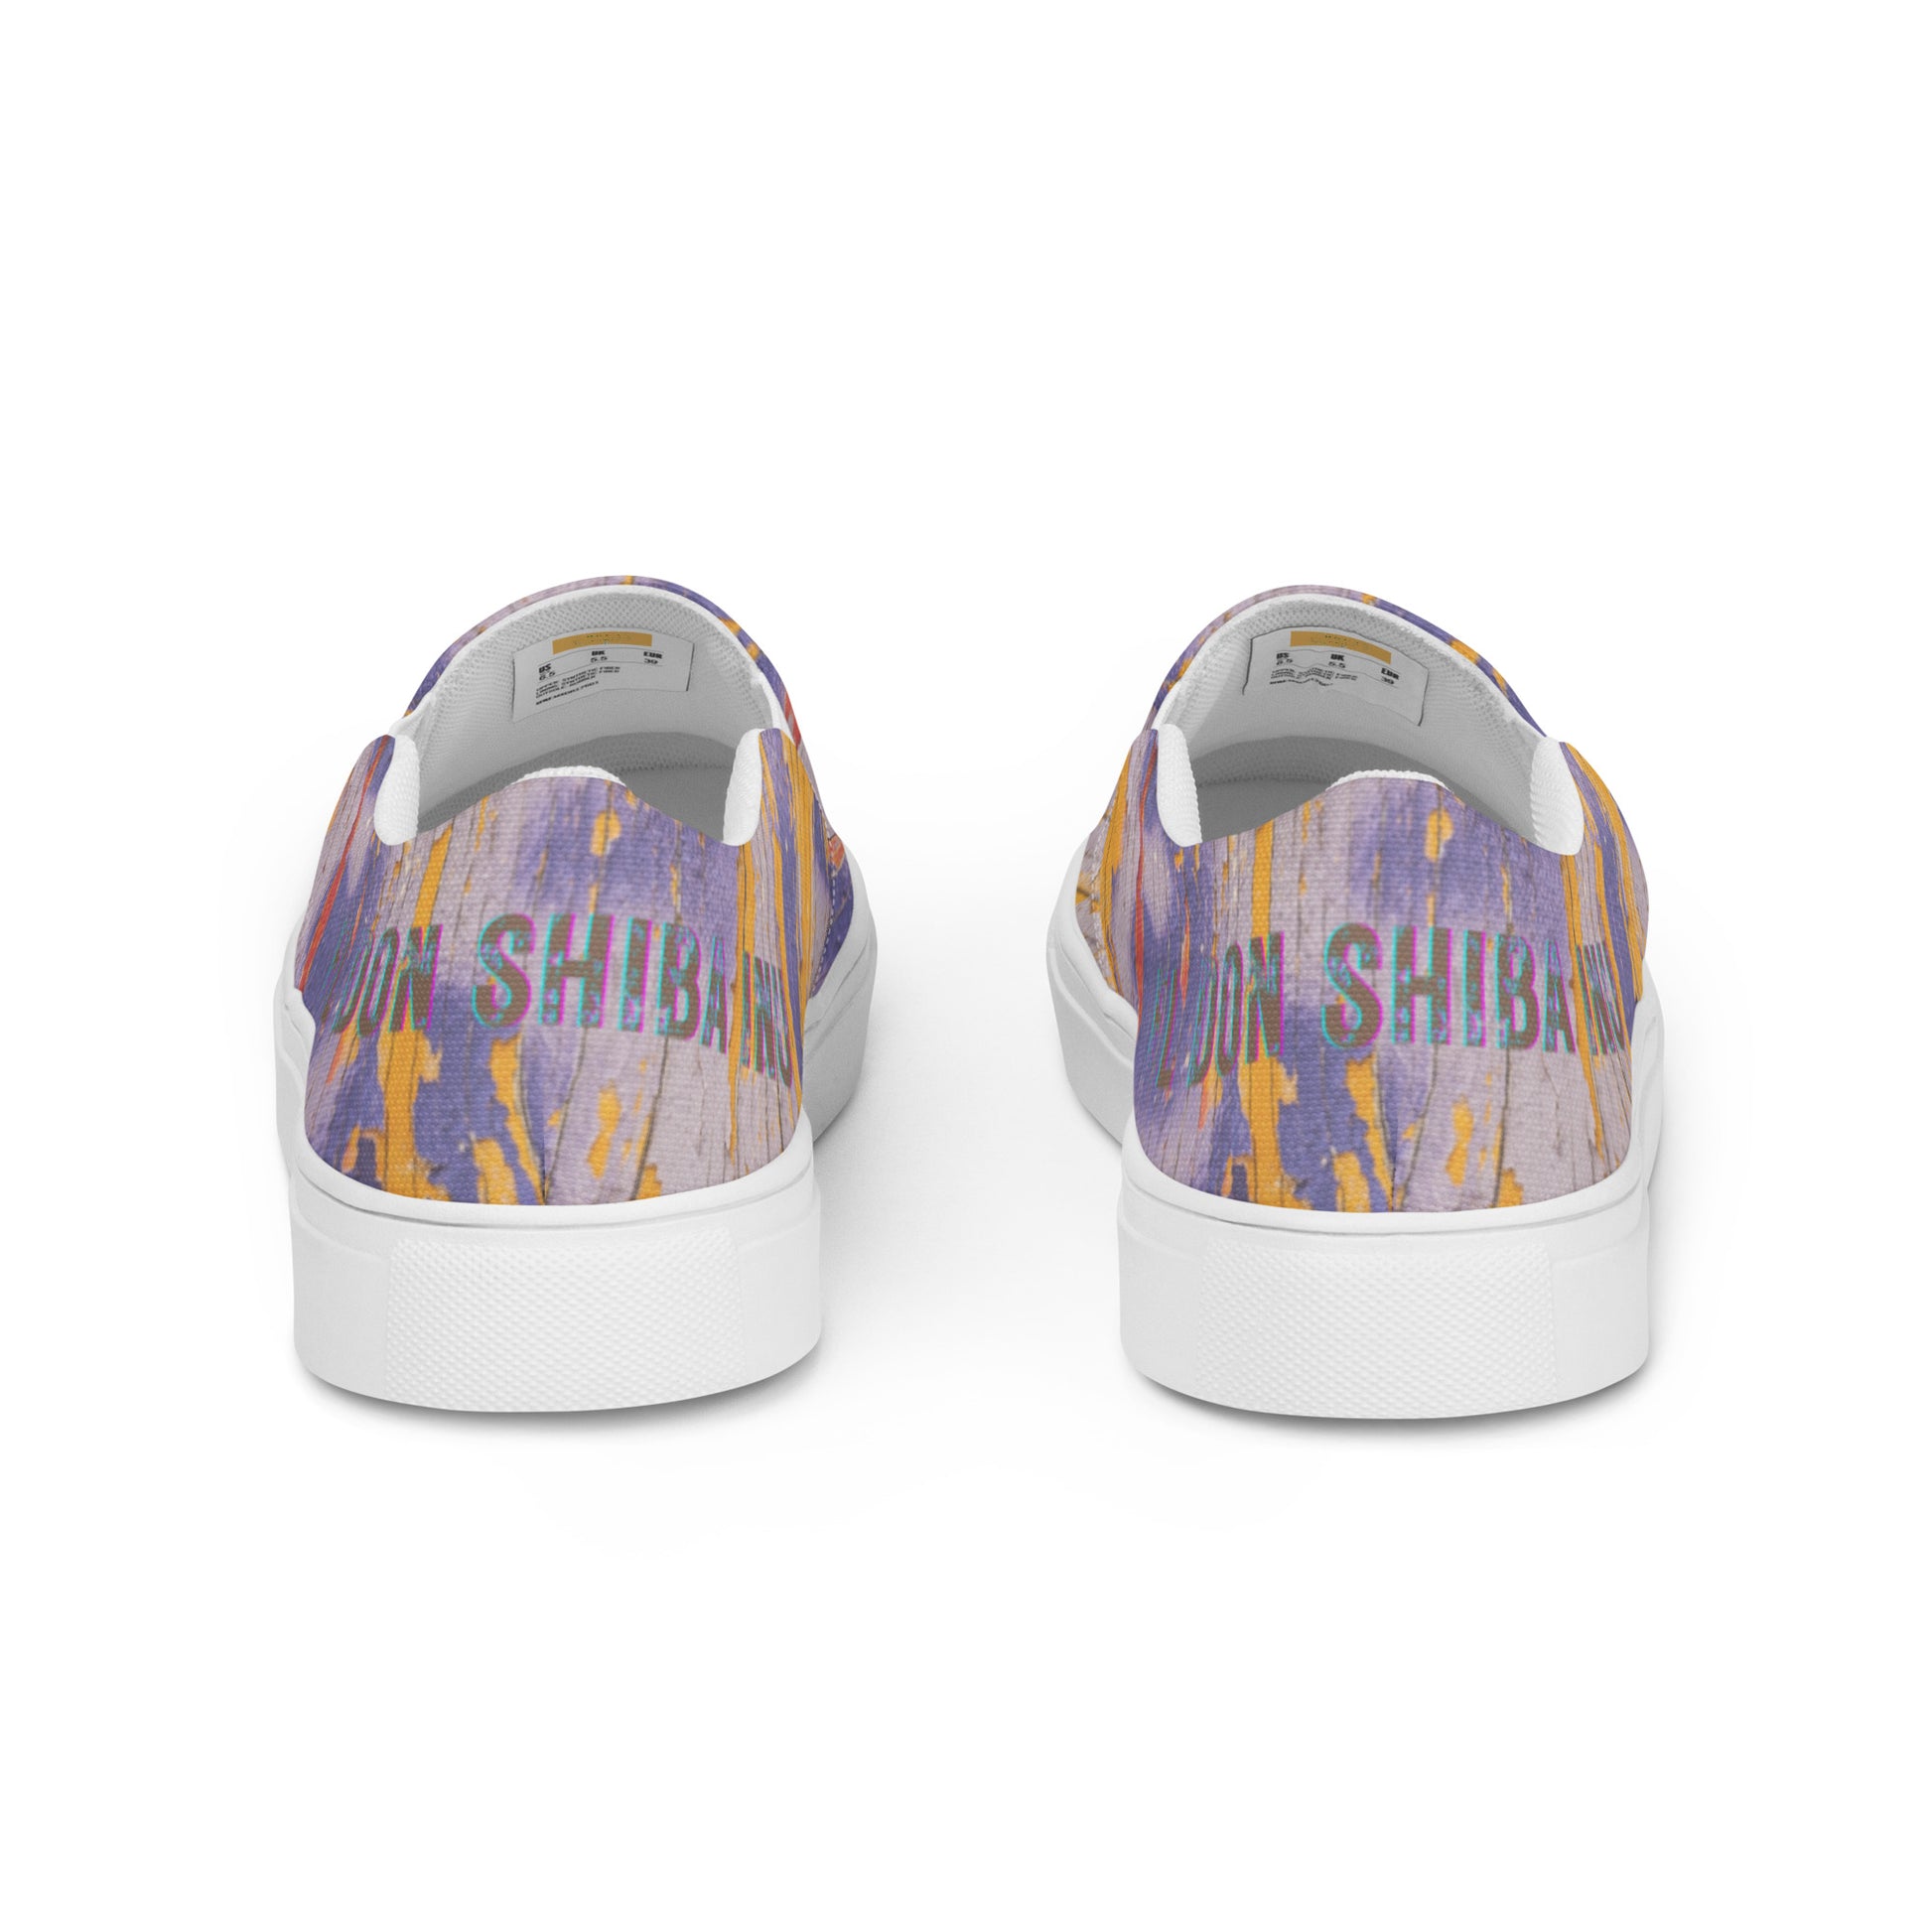 El Don Shiba Inu Men’s slip-on Canvas Shoes | BKLA | Shoes & Accessories | shoes, hats, phone covers, tote bags, clutch bags